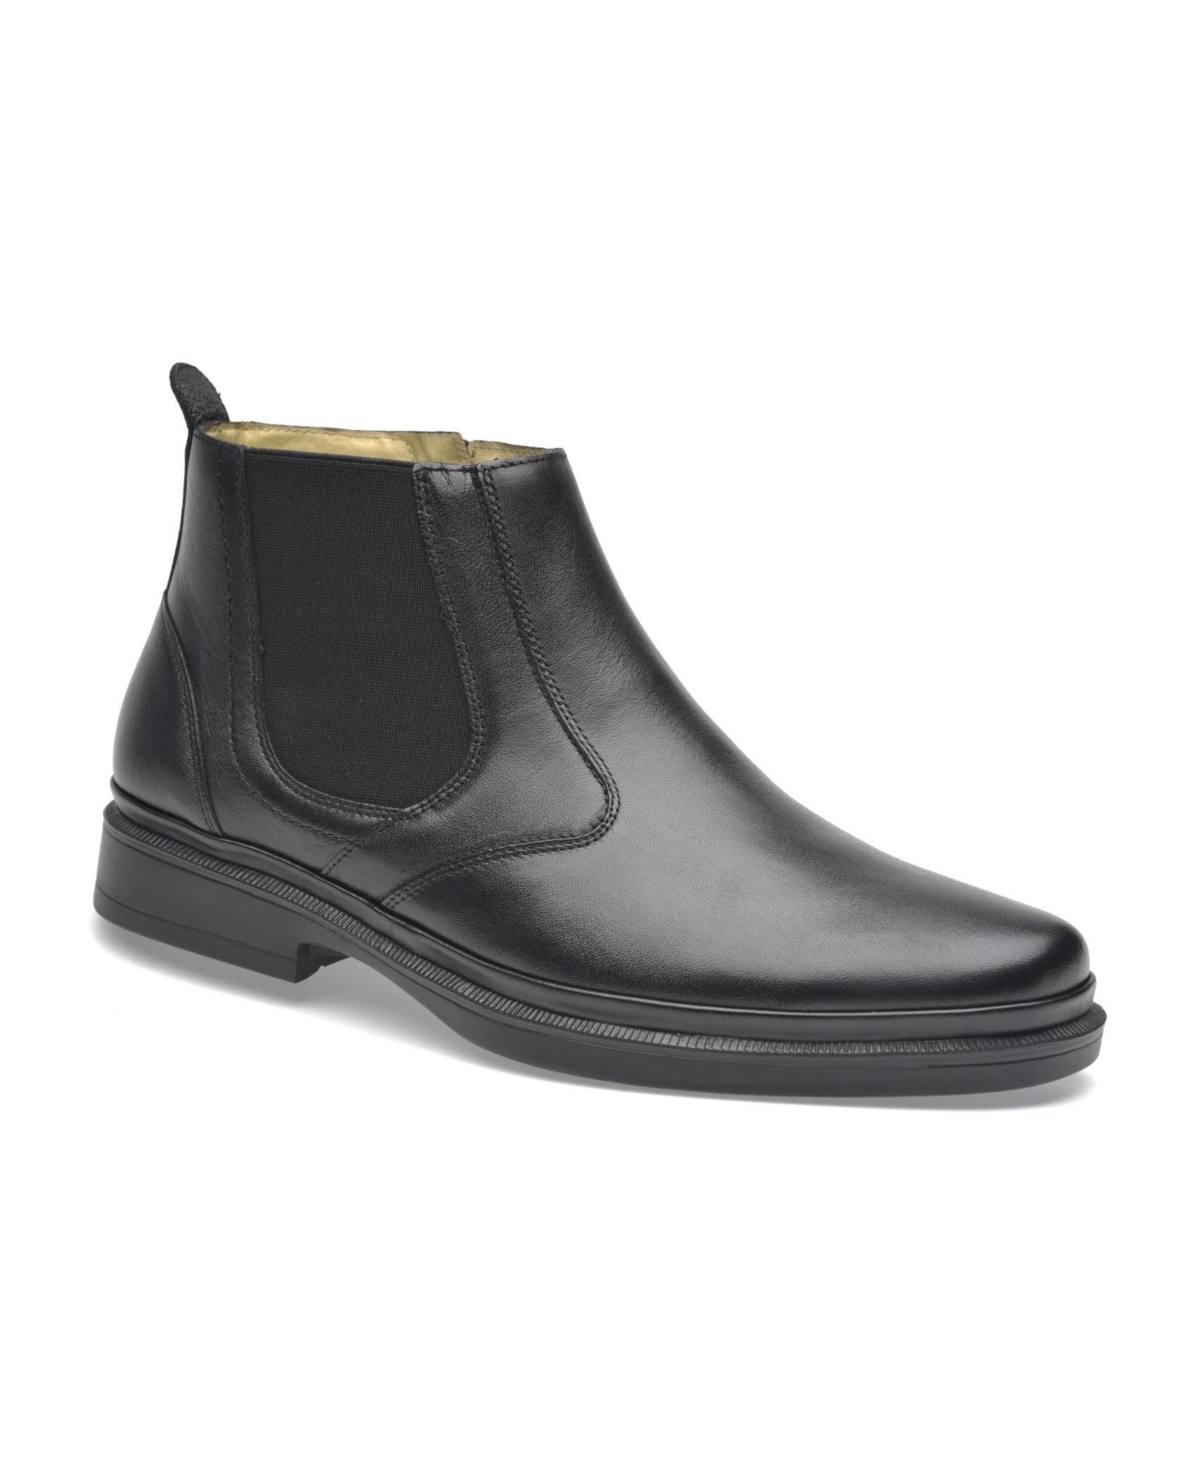 Men's Premium Comfort Lambskin Leather Booties Traditional Max - Black